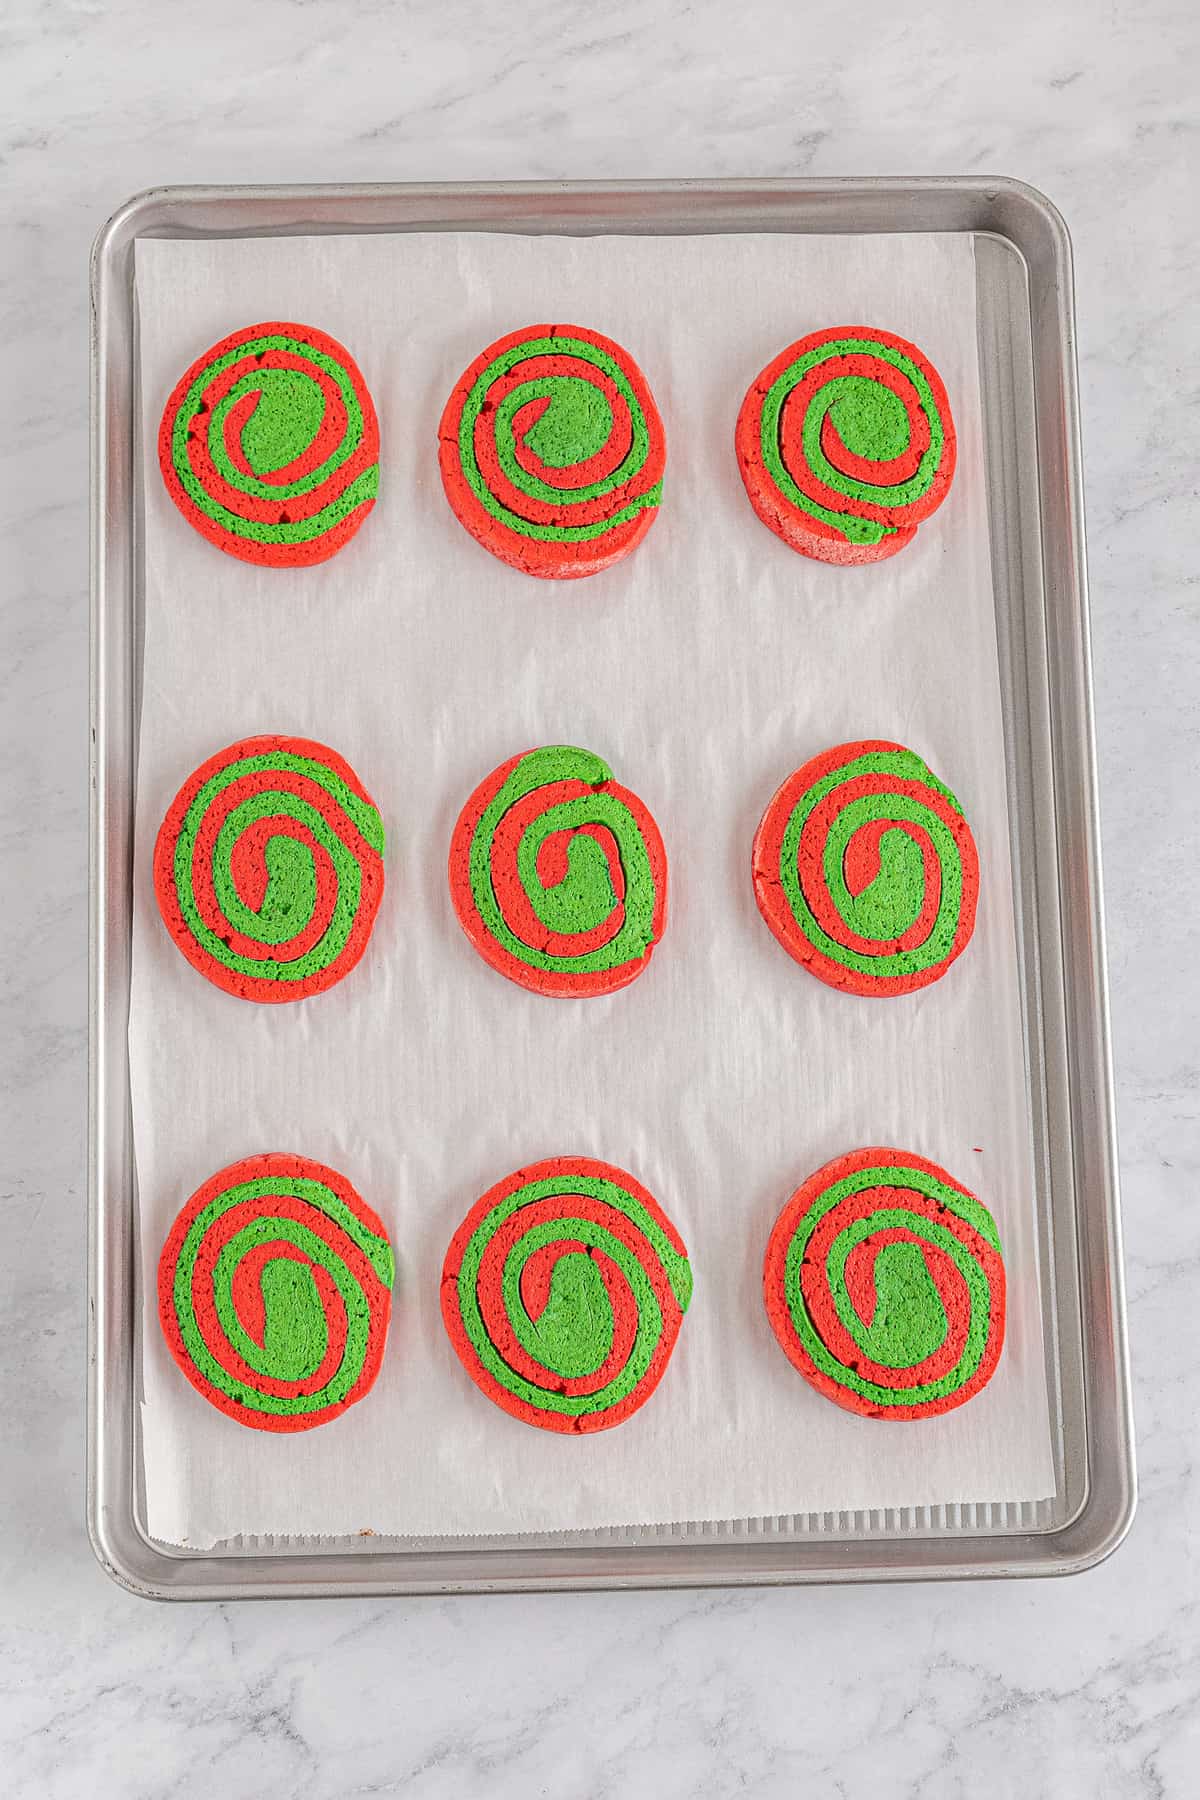 Baked Christmas pinwheel cookies sliced and on baking sheet